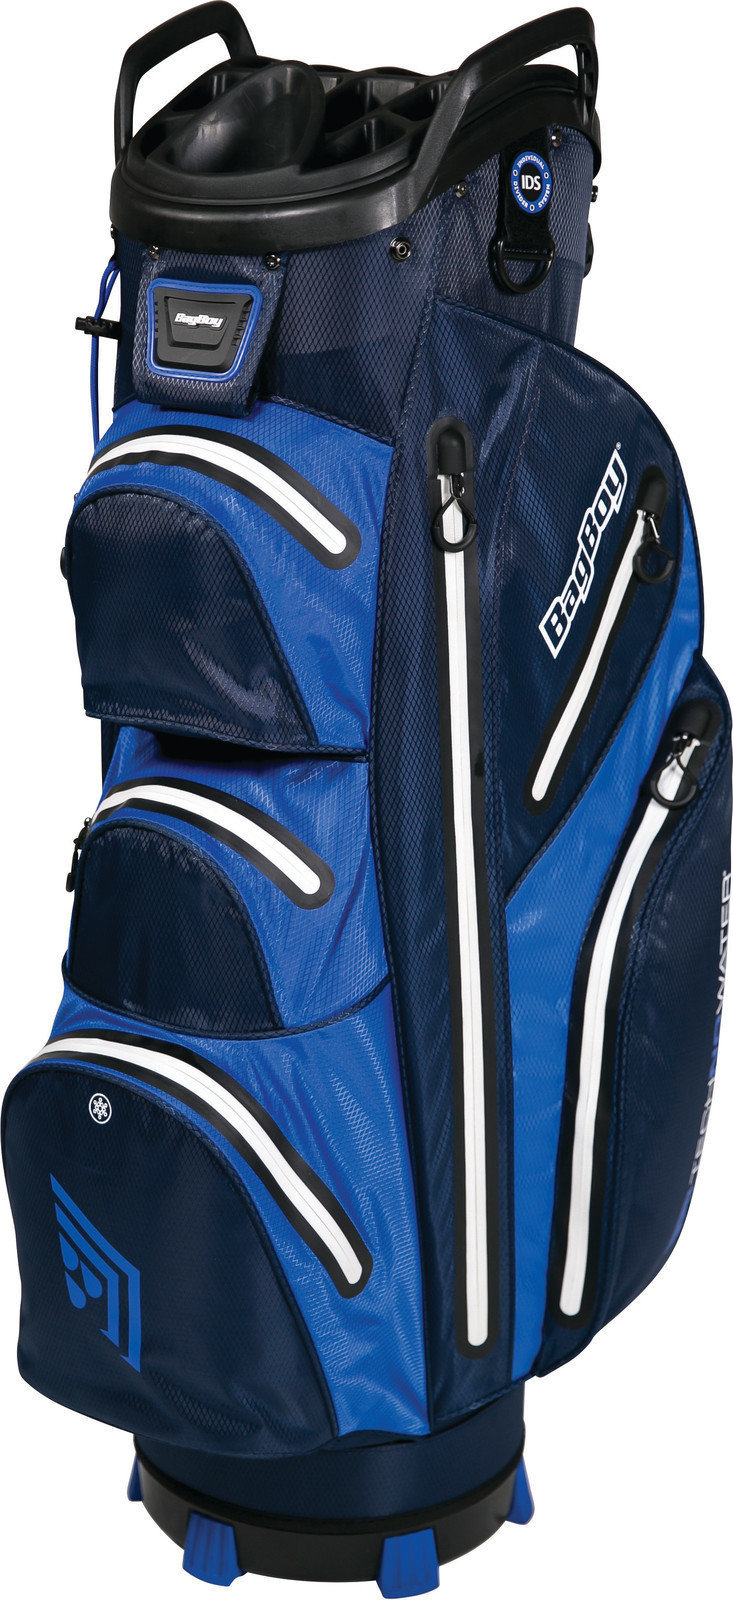 Golf torba BagBoy Techno 302 Waterproof Navy/Royal/White Cart Bag